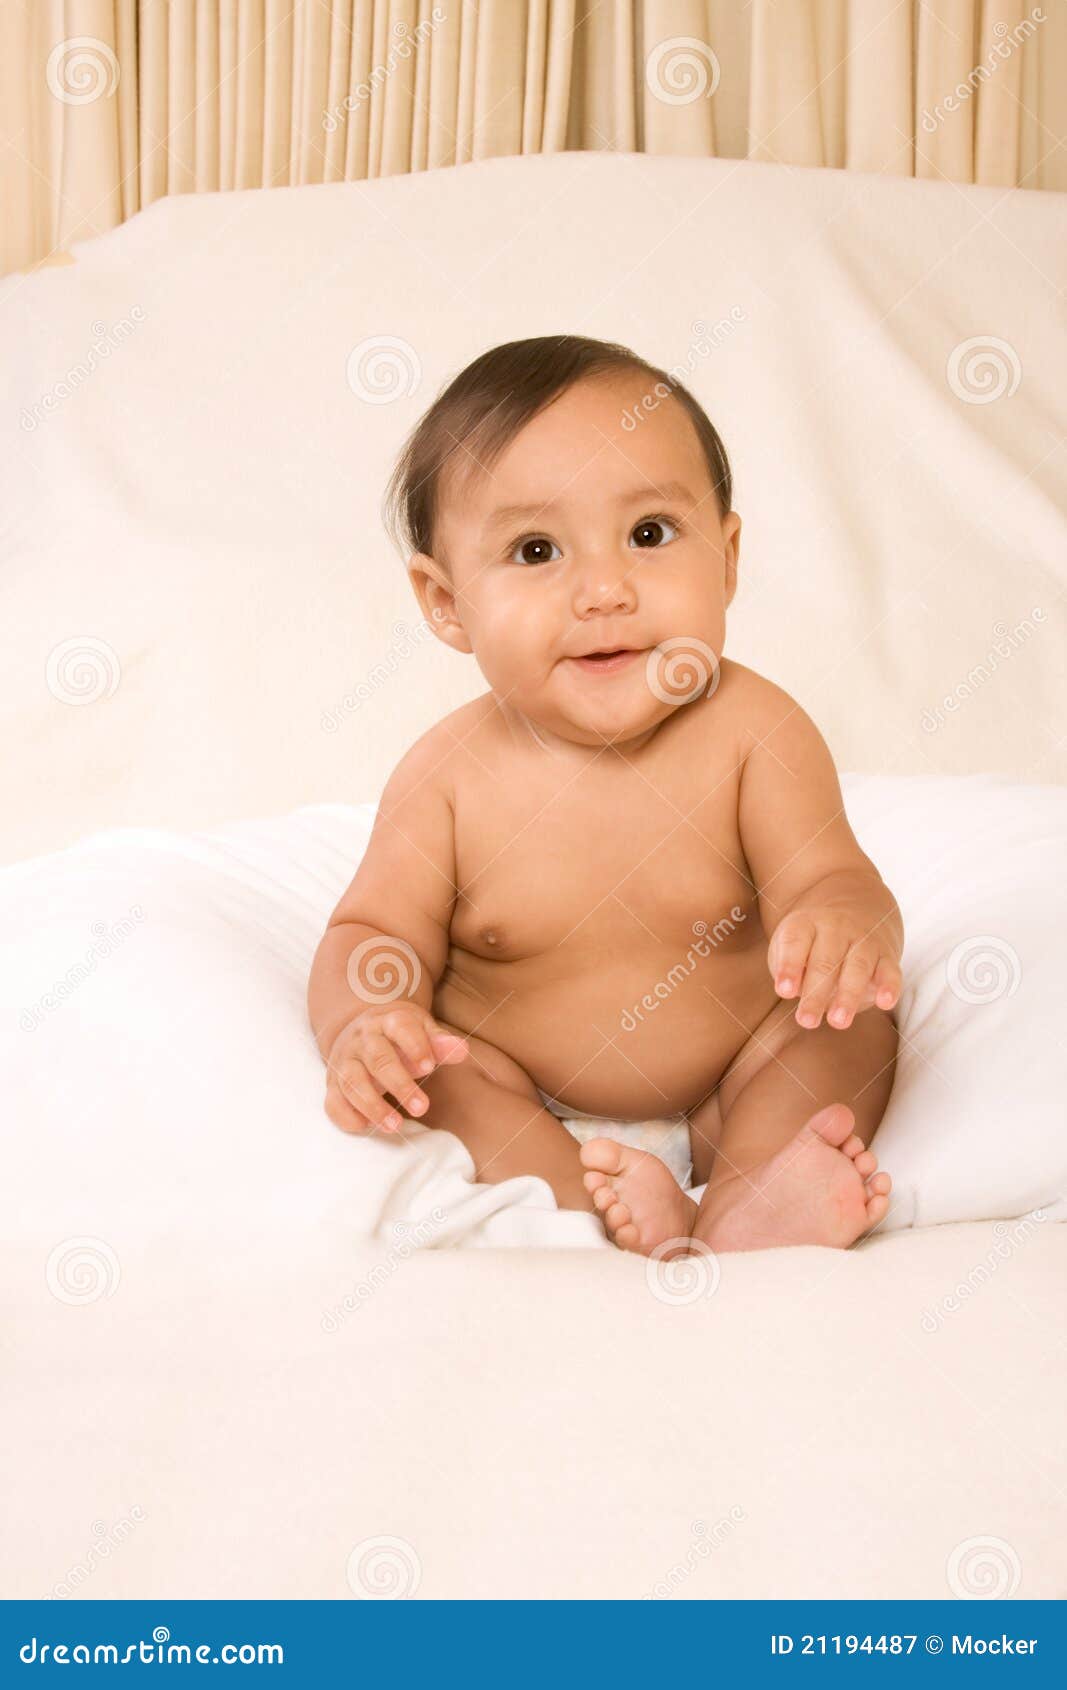 Excited Ethnic Baby Boy Sitting on Blanket Stock Image - Image of ...